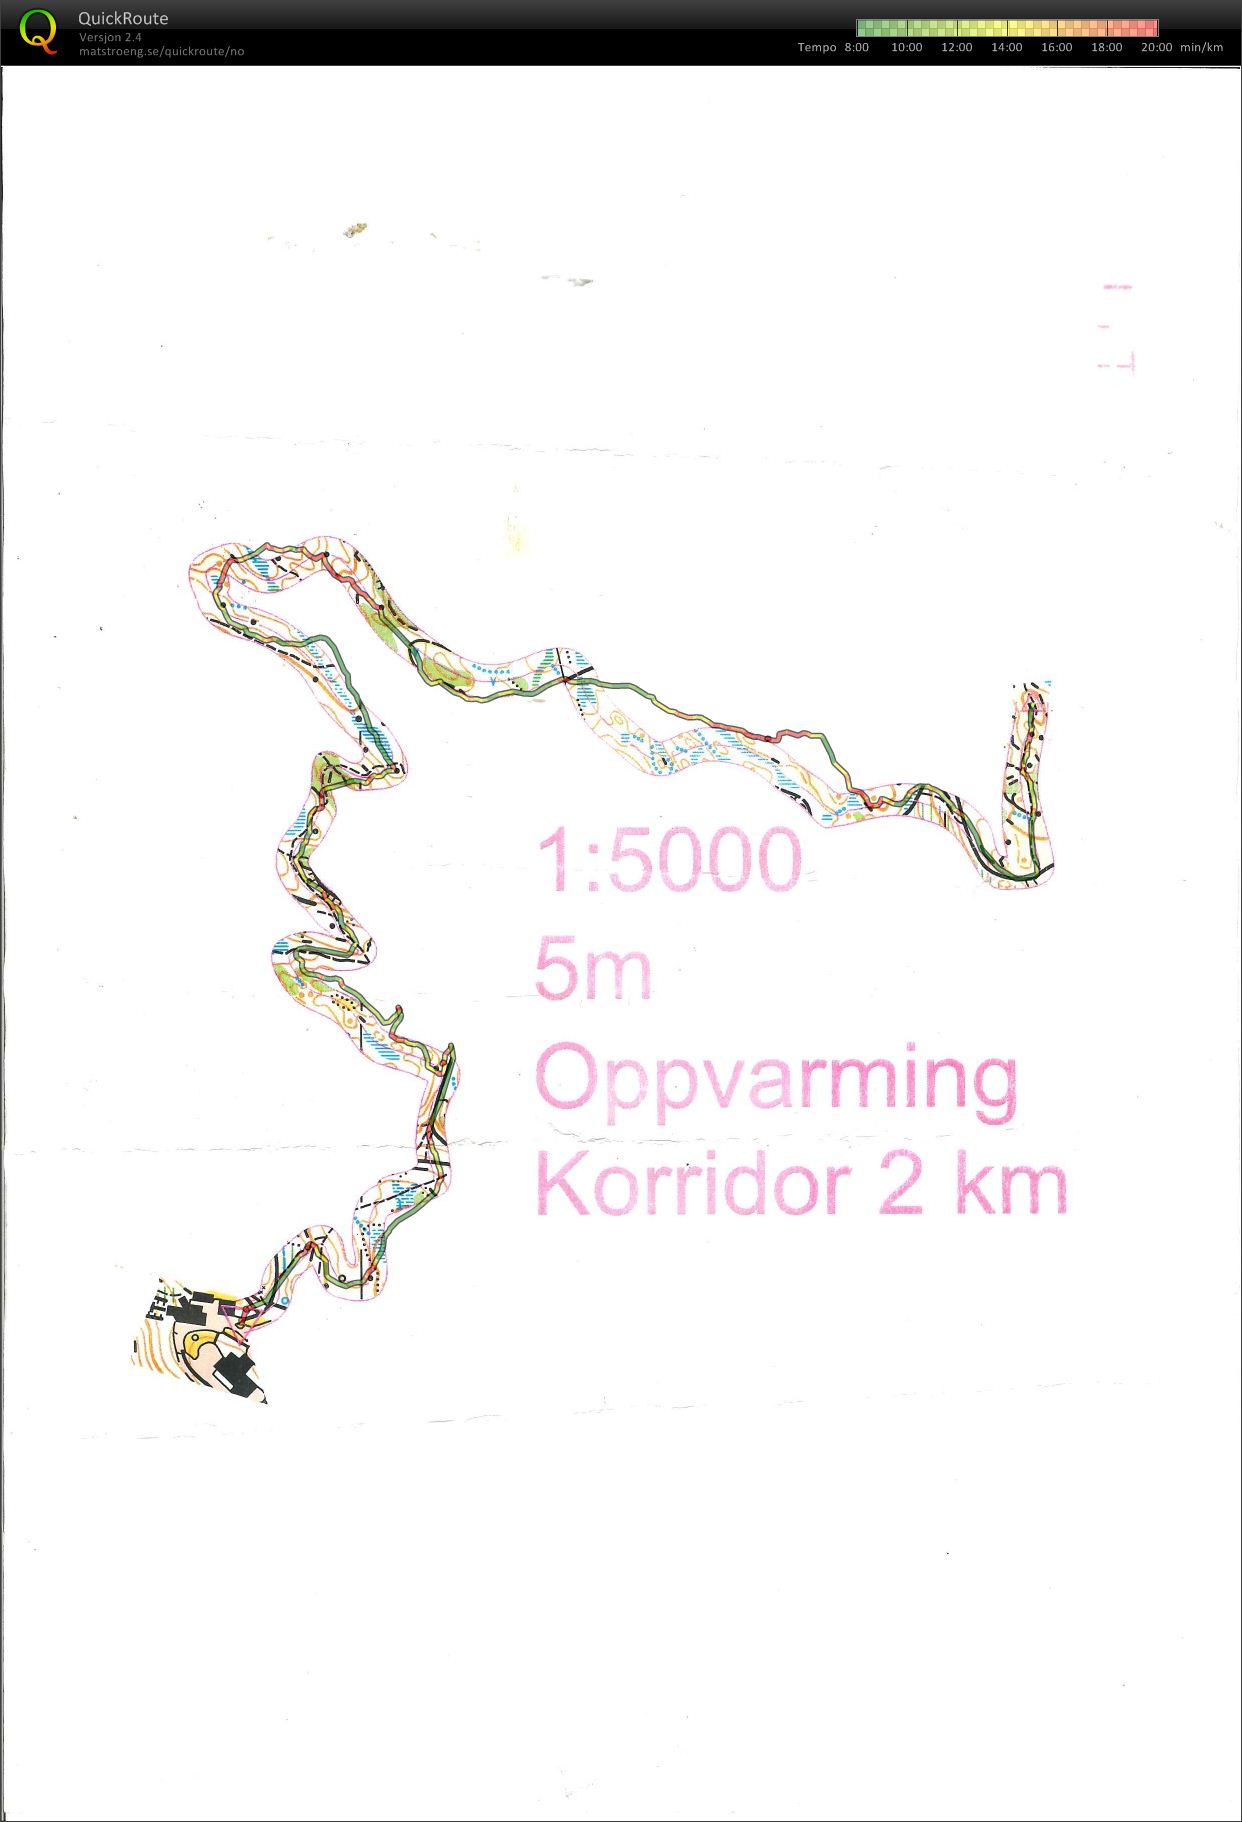 O-korridor Fløyen (18-01-2014)